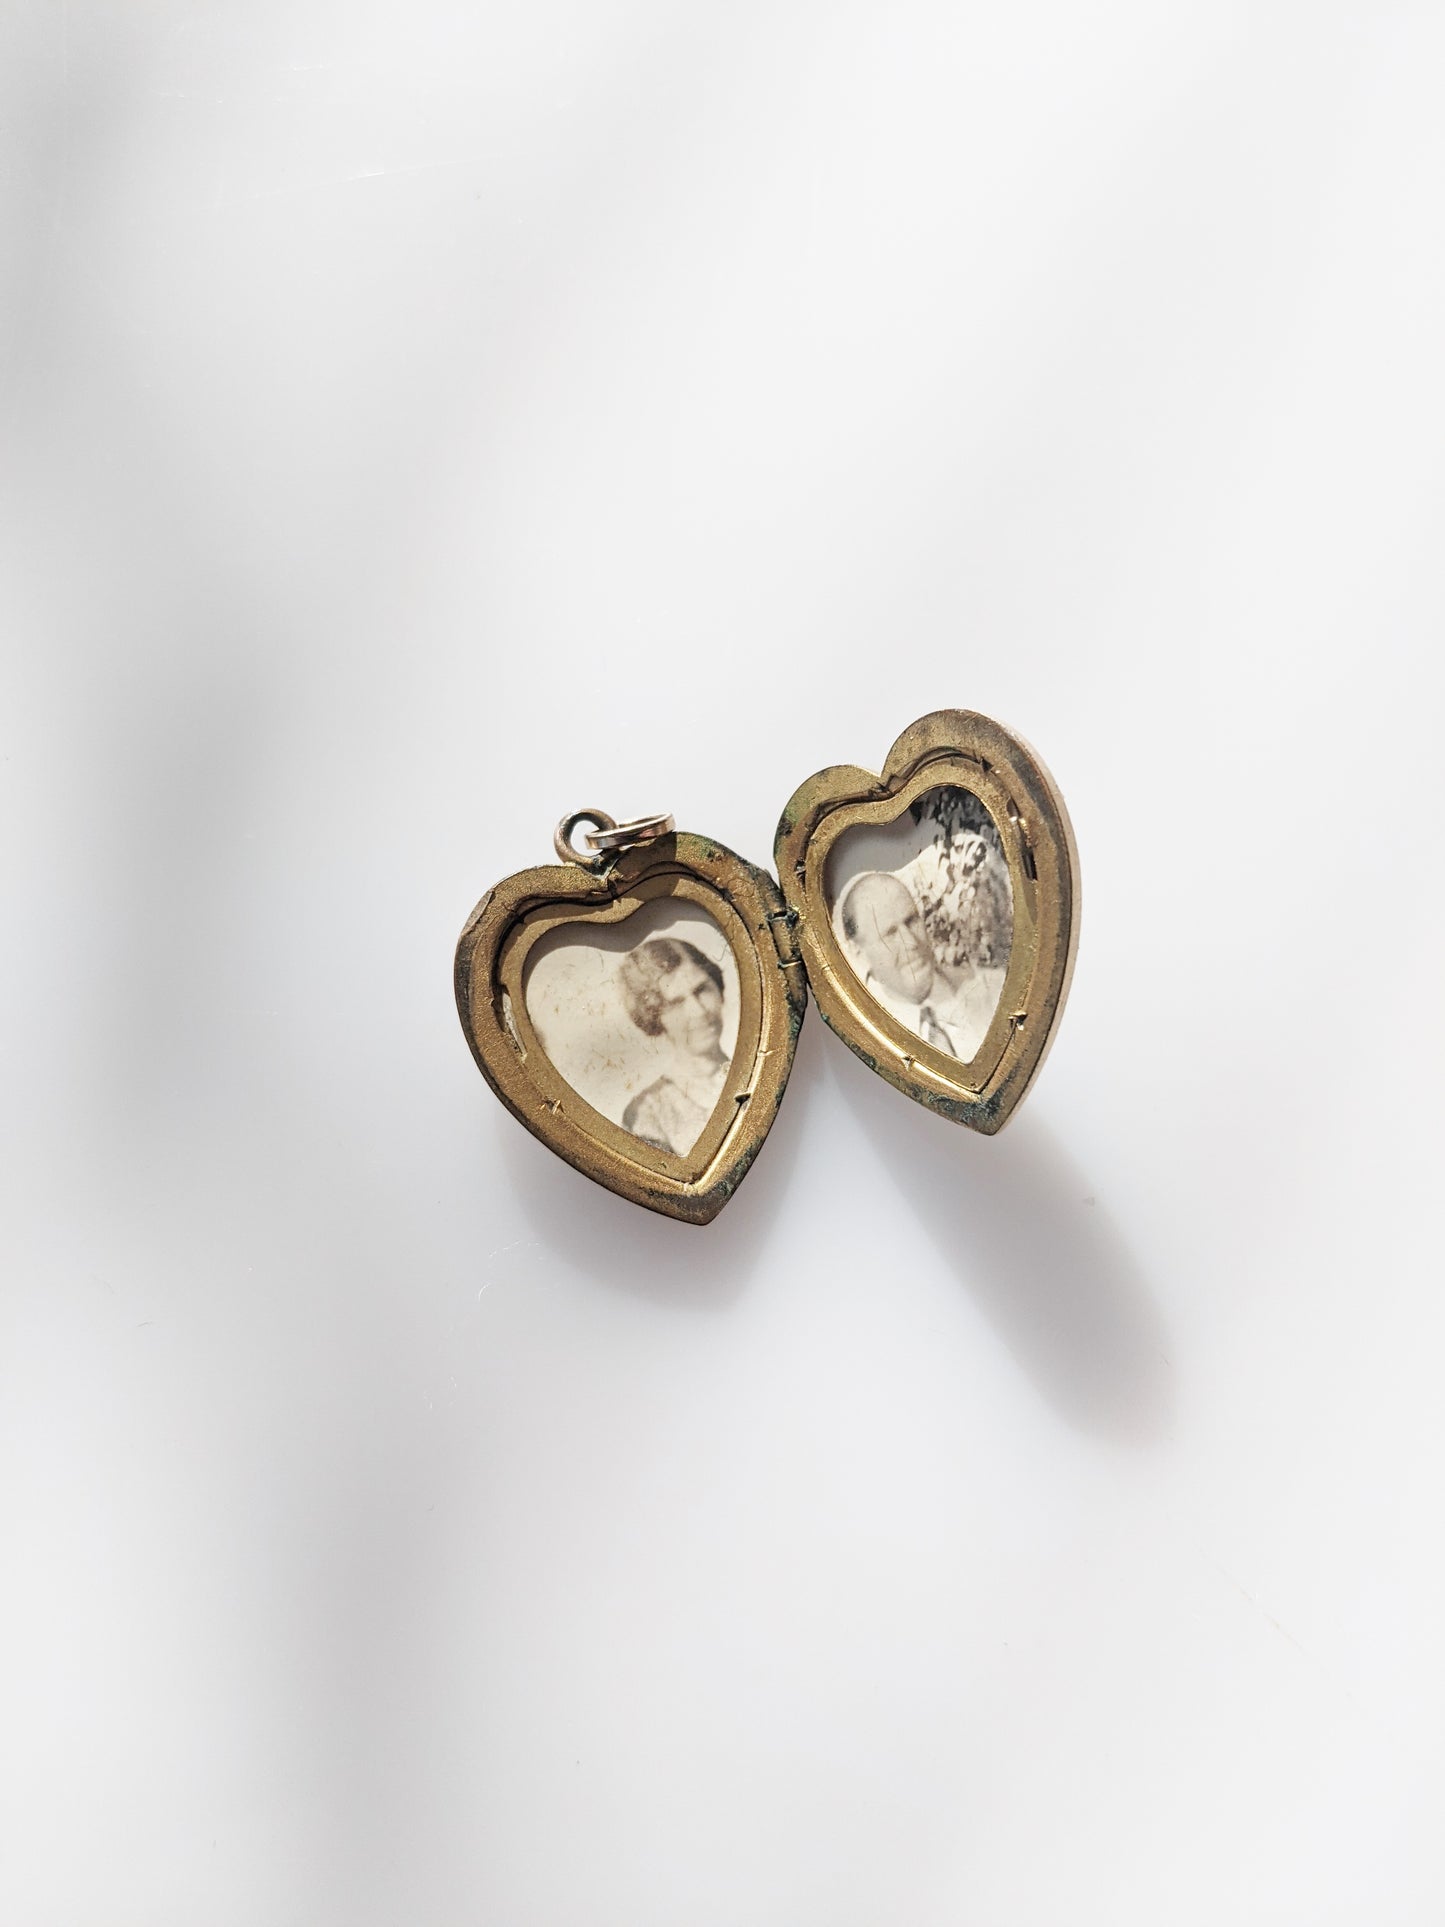 Antique Gold Heart Shaped Locket | Art Deco + "H" Initial